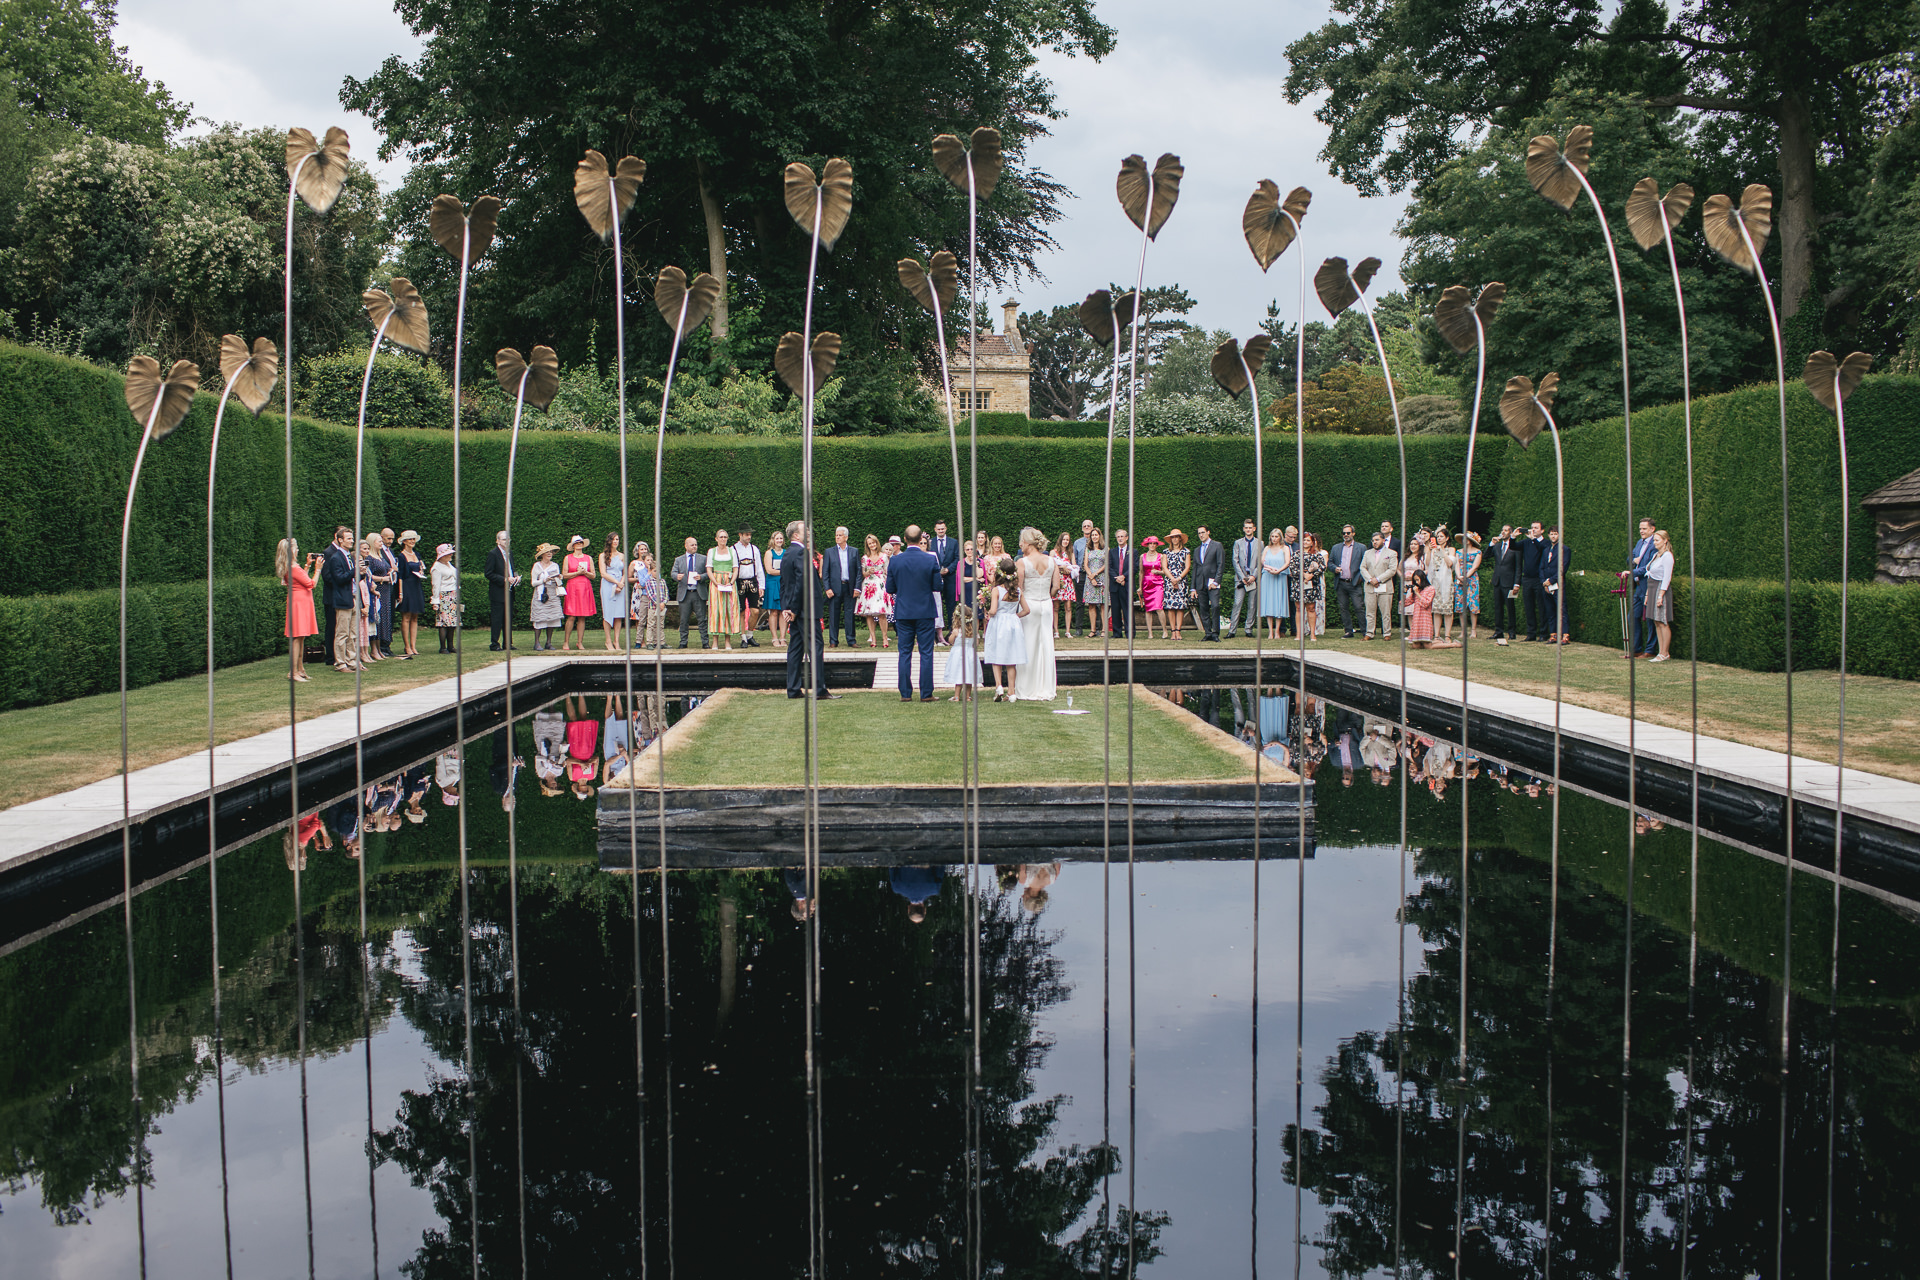 A wedding ceremony in an ornamental pond